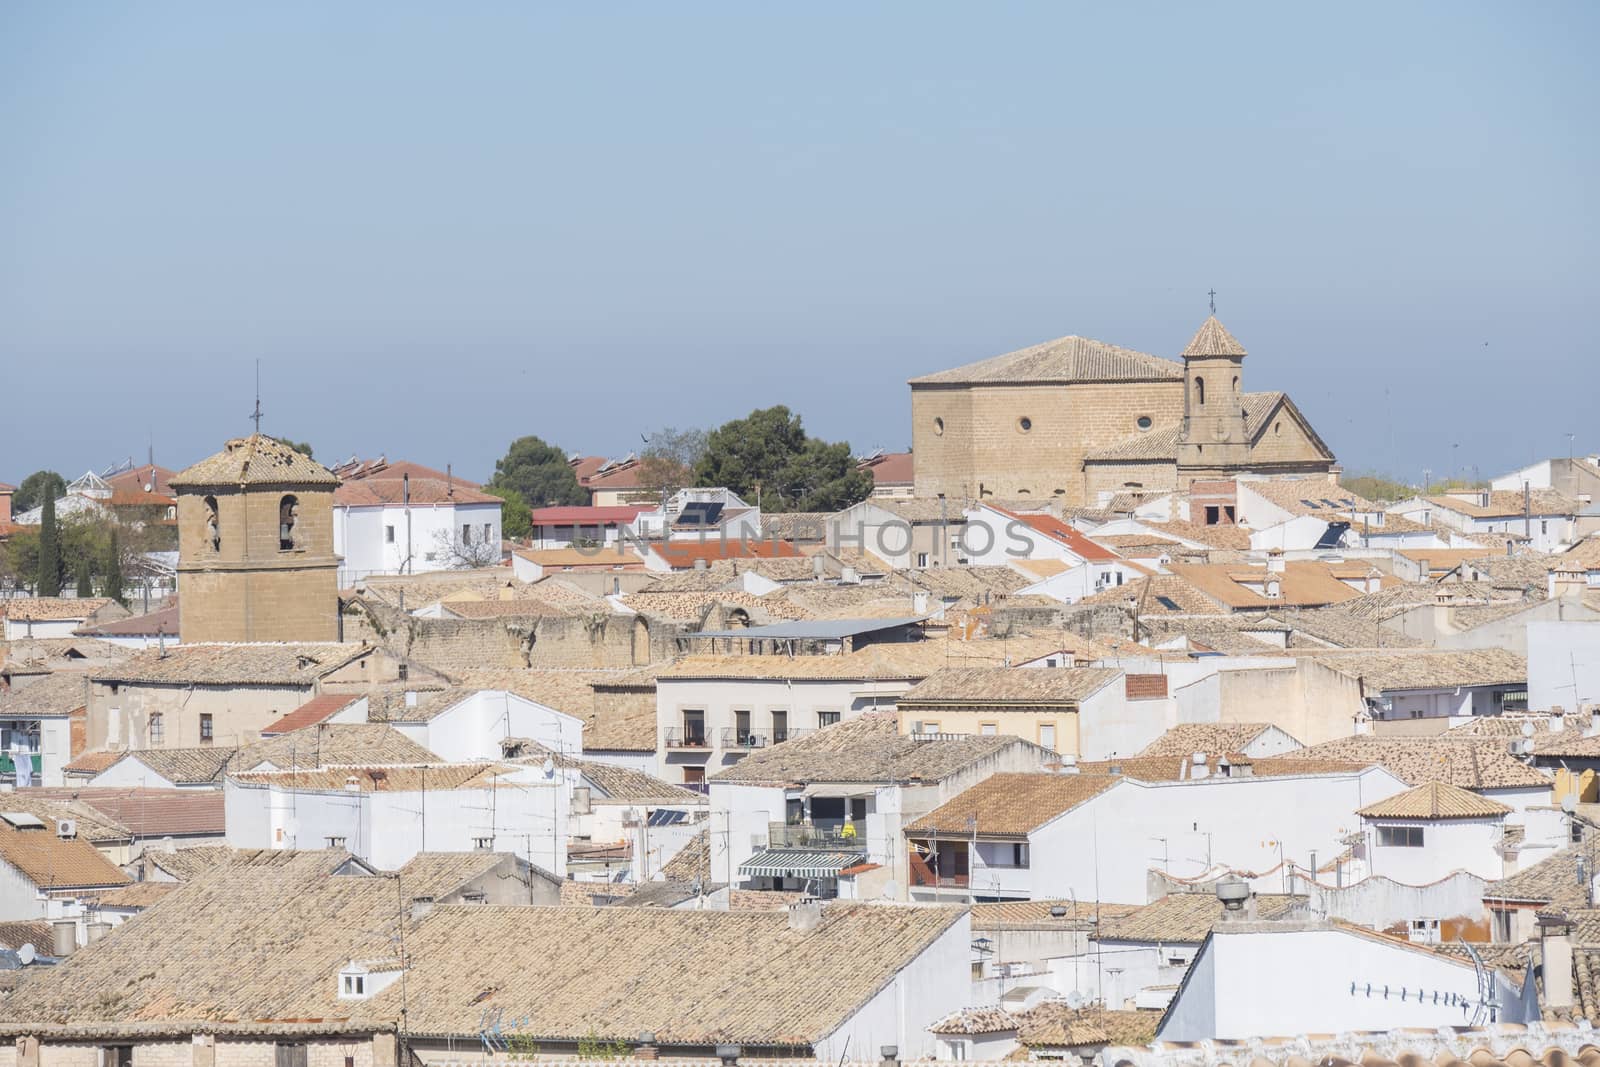 Baeza city (World Heritage Site), "Iglesia de los Descalzos" and by max8xam